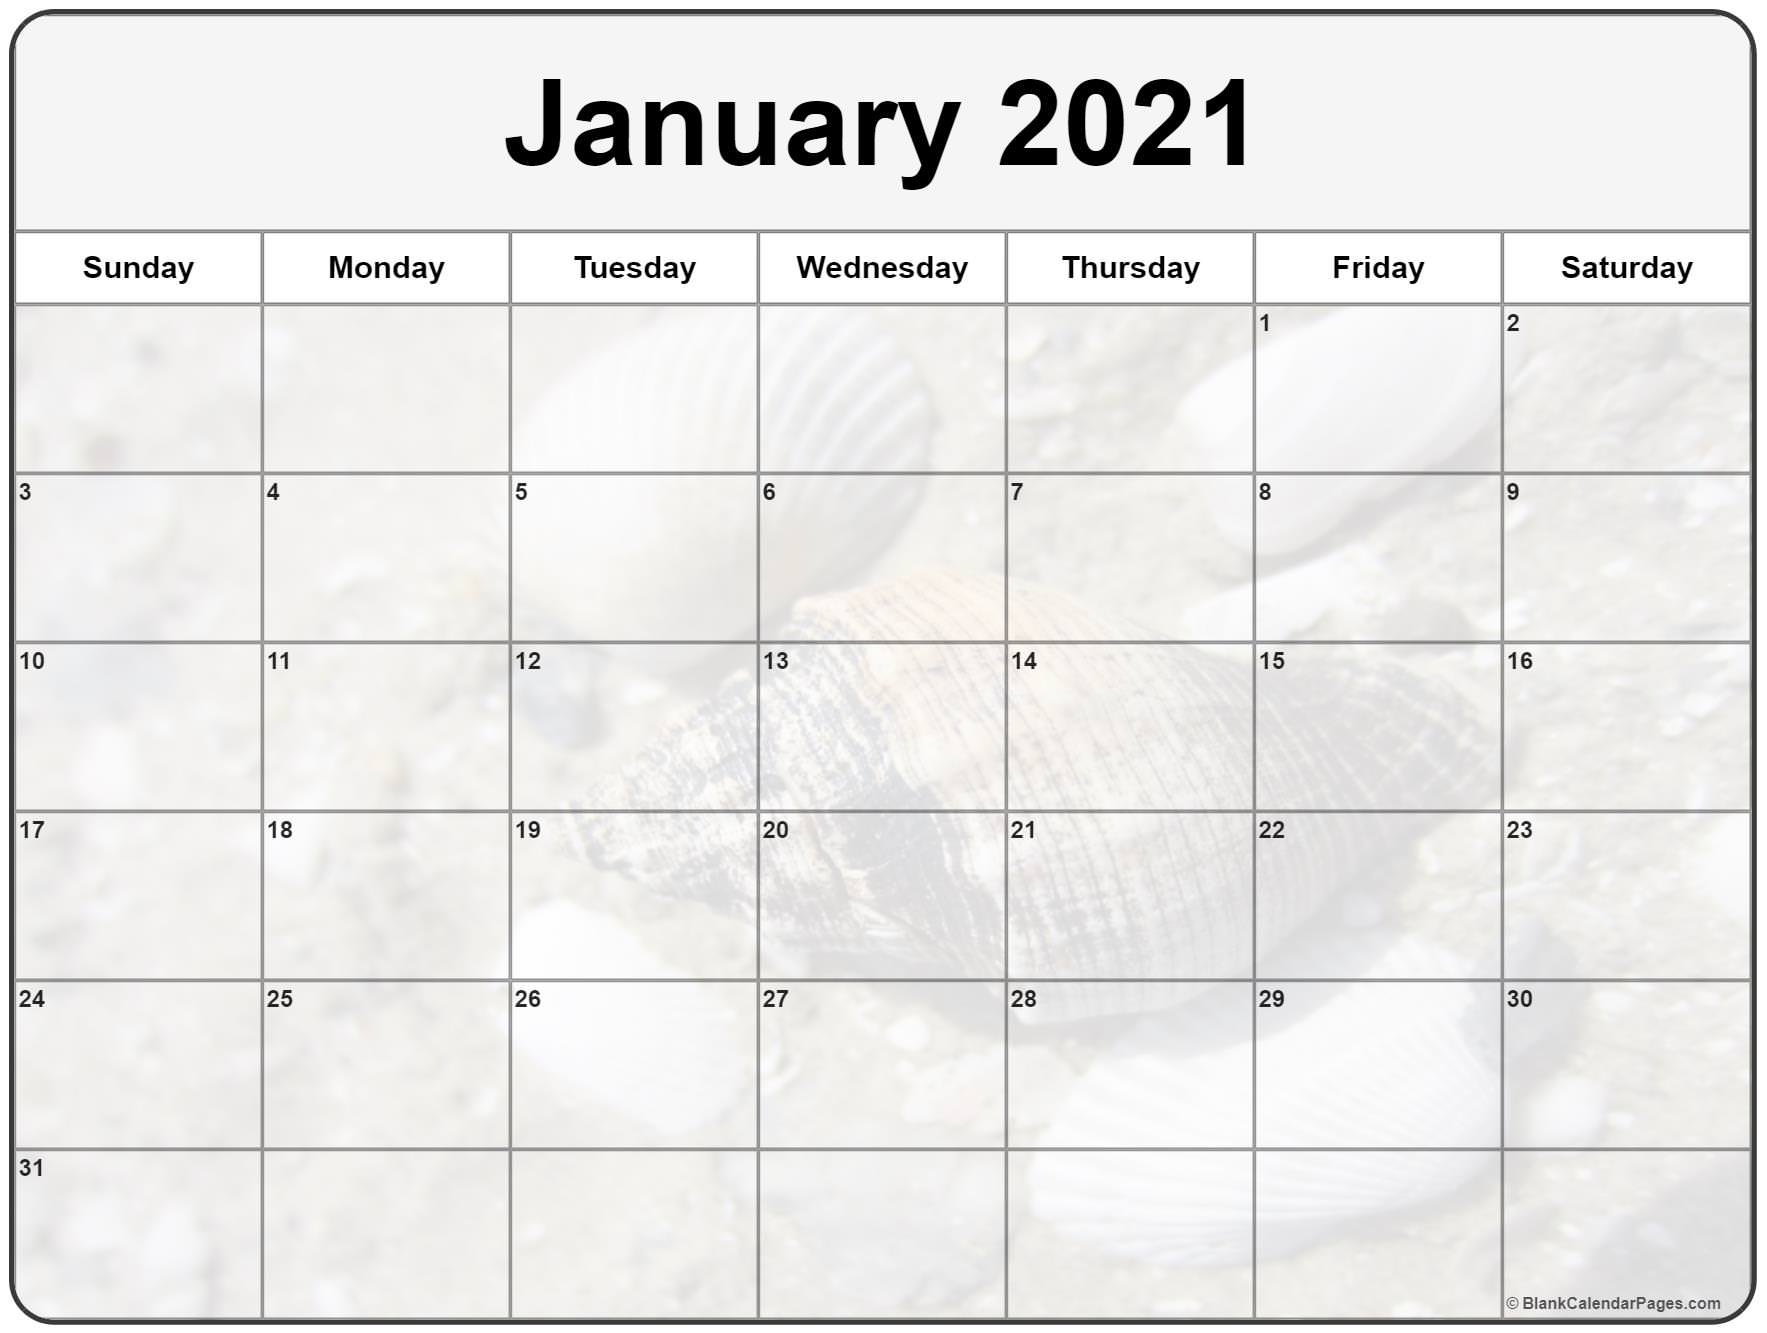 January 2021 Calendar Wallpaper Free January 2021 Calendar Background